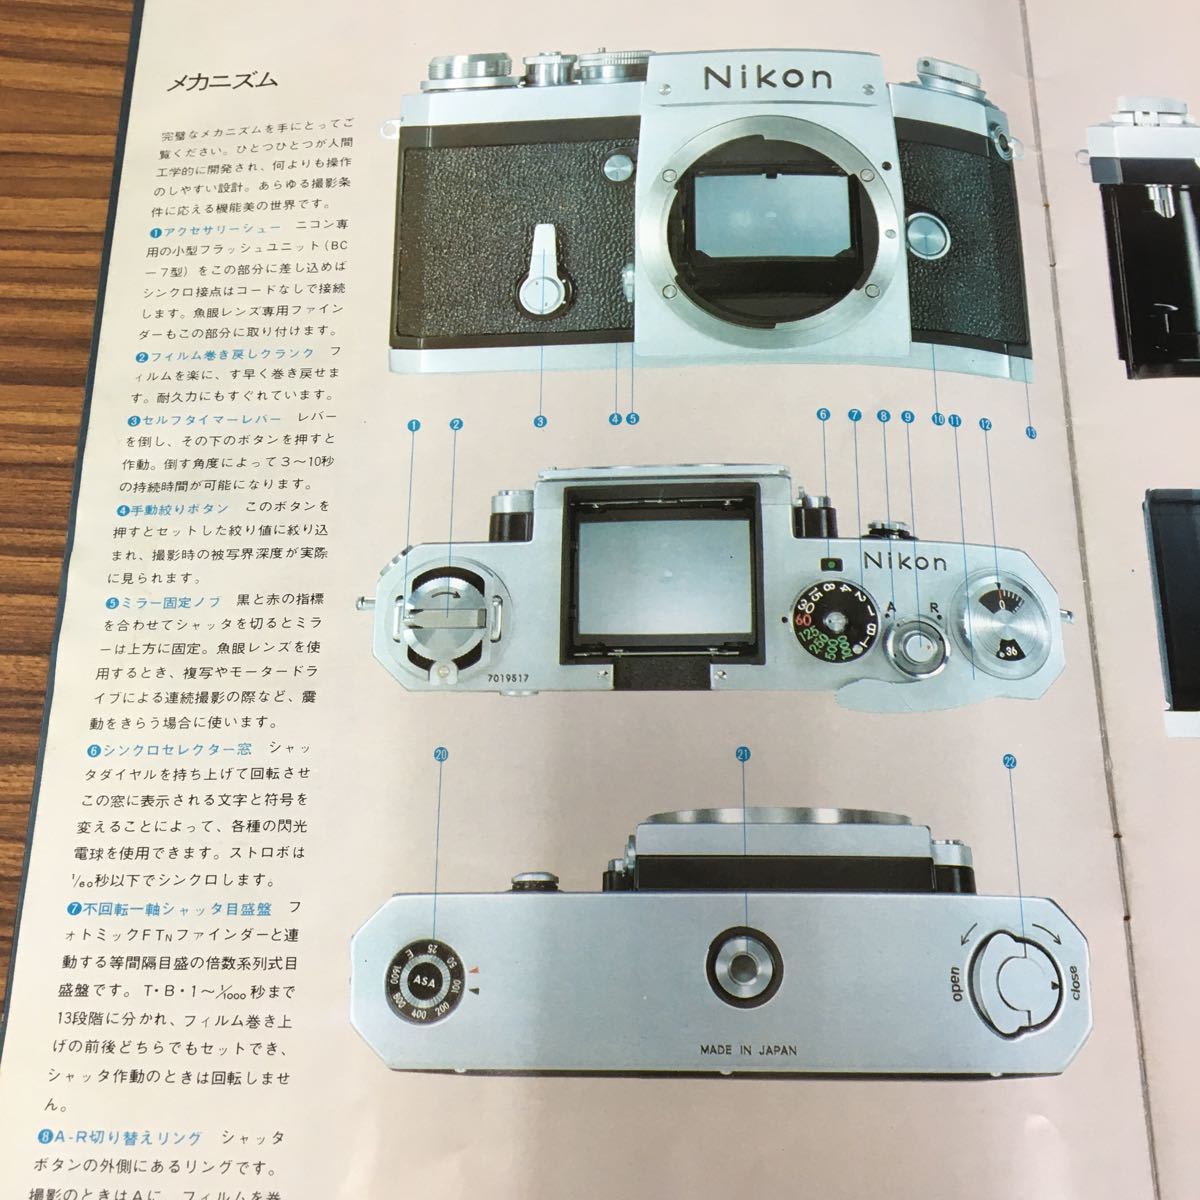 0Nikonni comfort mikFTN Nikon F NikonF 2 pcs. set writing equipped catalog pamphlet 